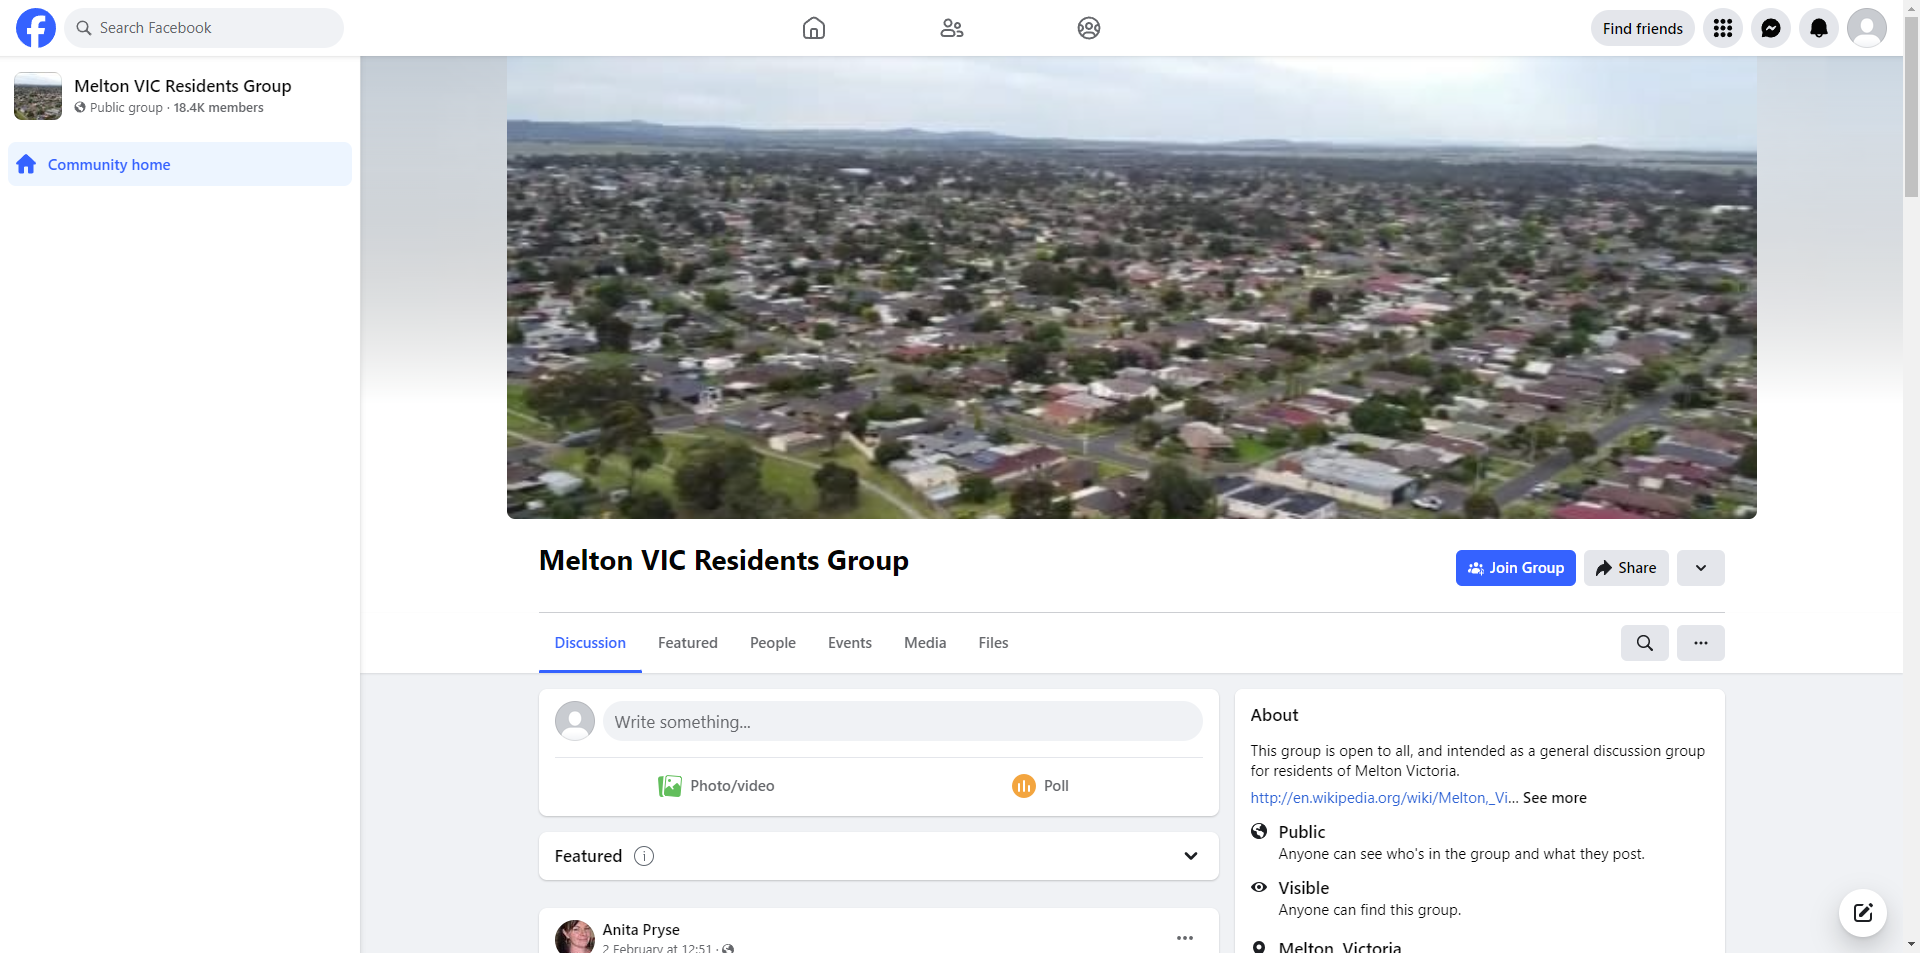 Melton VIC Residents Group